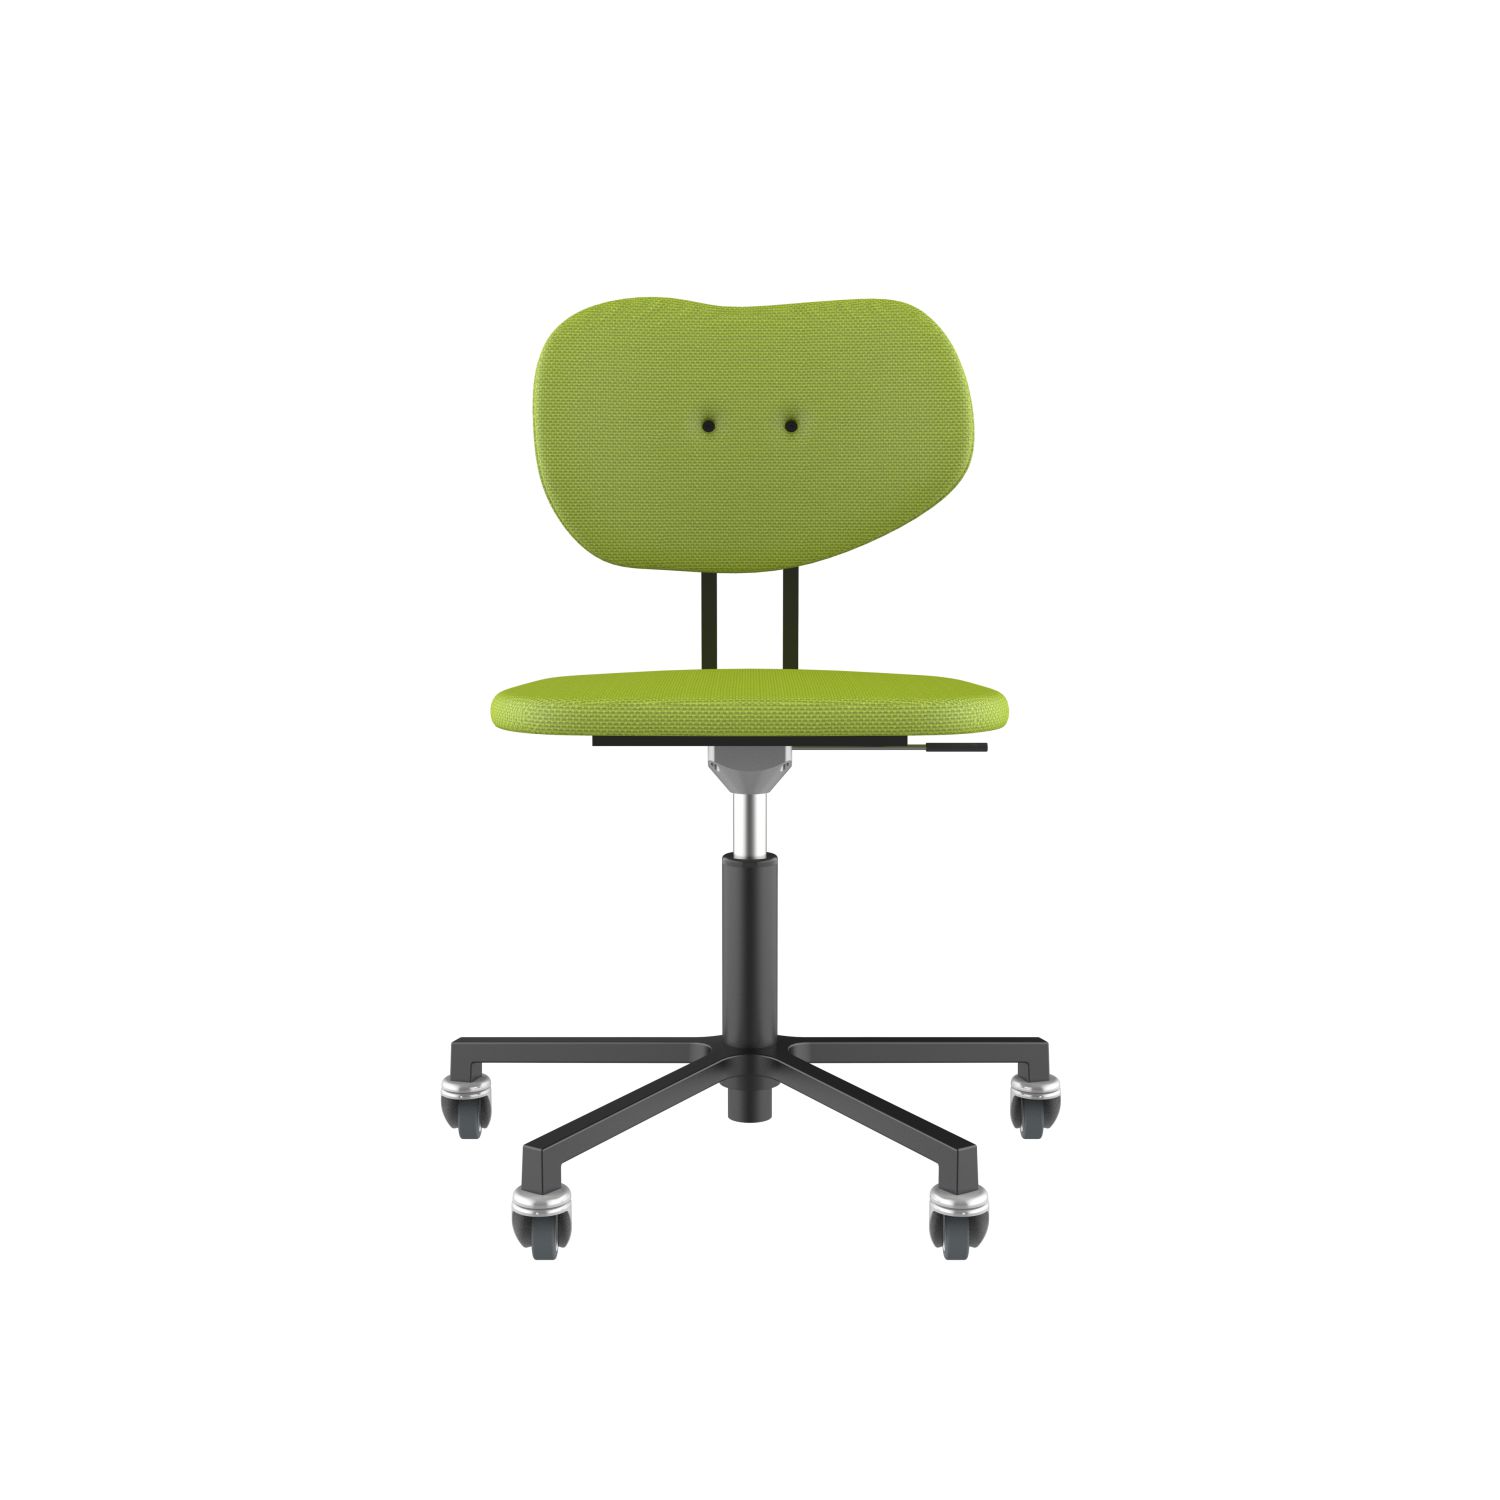 lensvelt maarten baas office chair without armrests backrest b fairway green 020 black ral9005 soft wheels